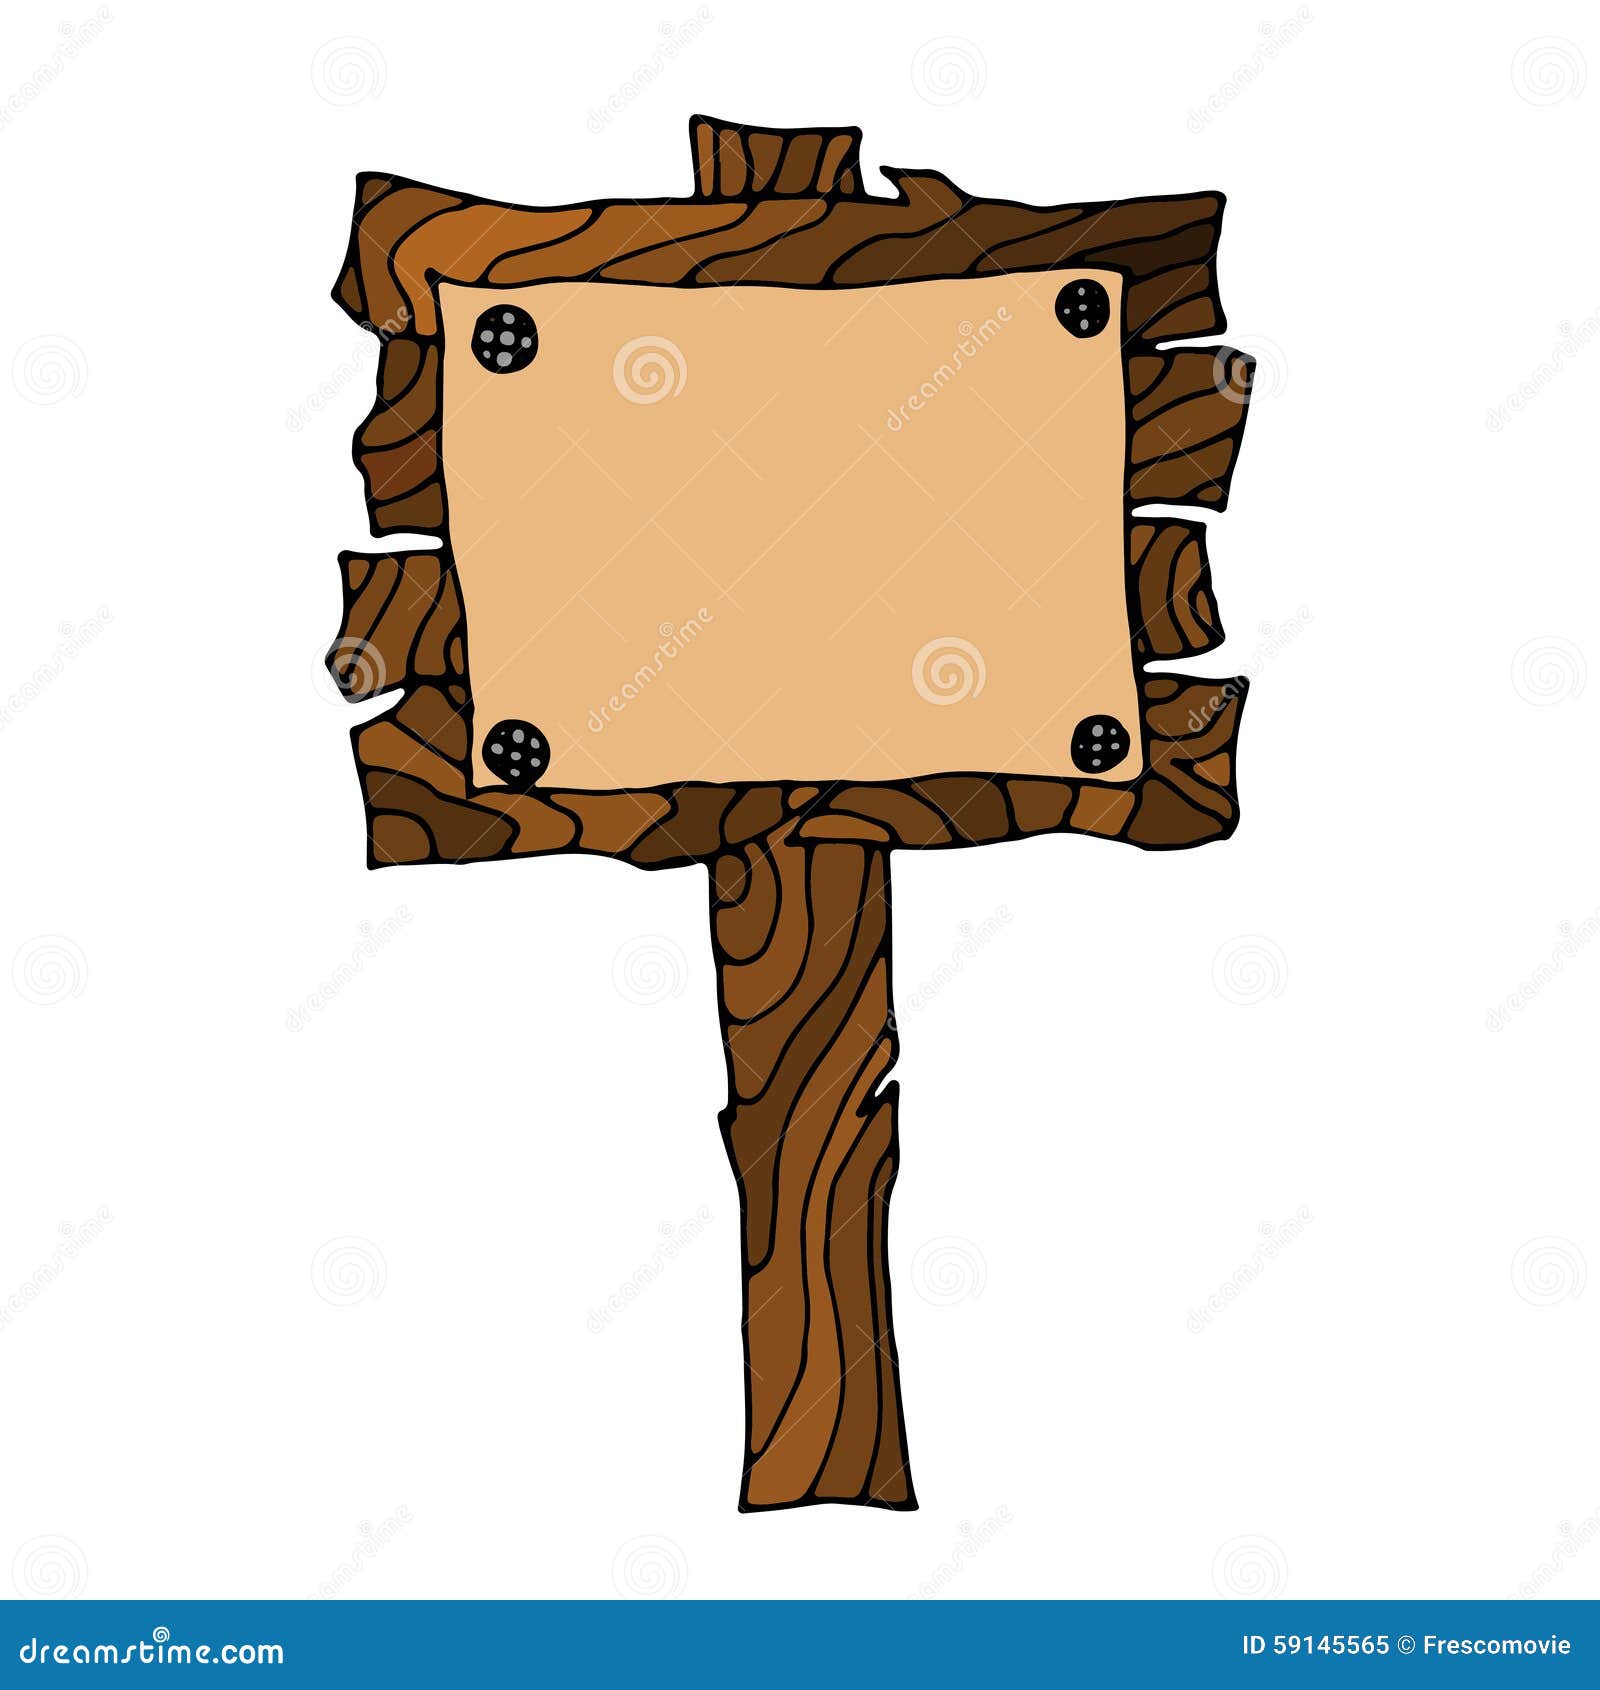 Wooden Signpos stock vector. Illustration of cartoon - 59145565